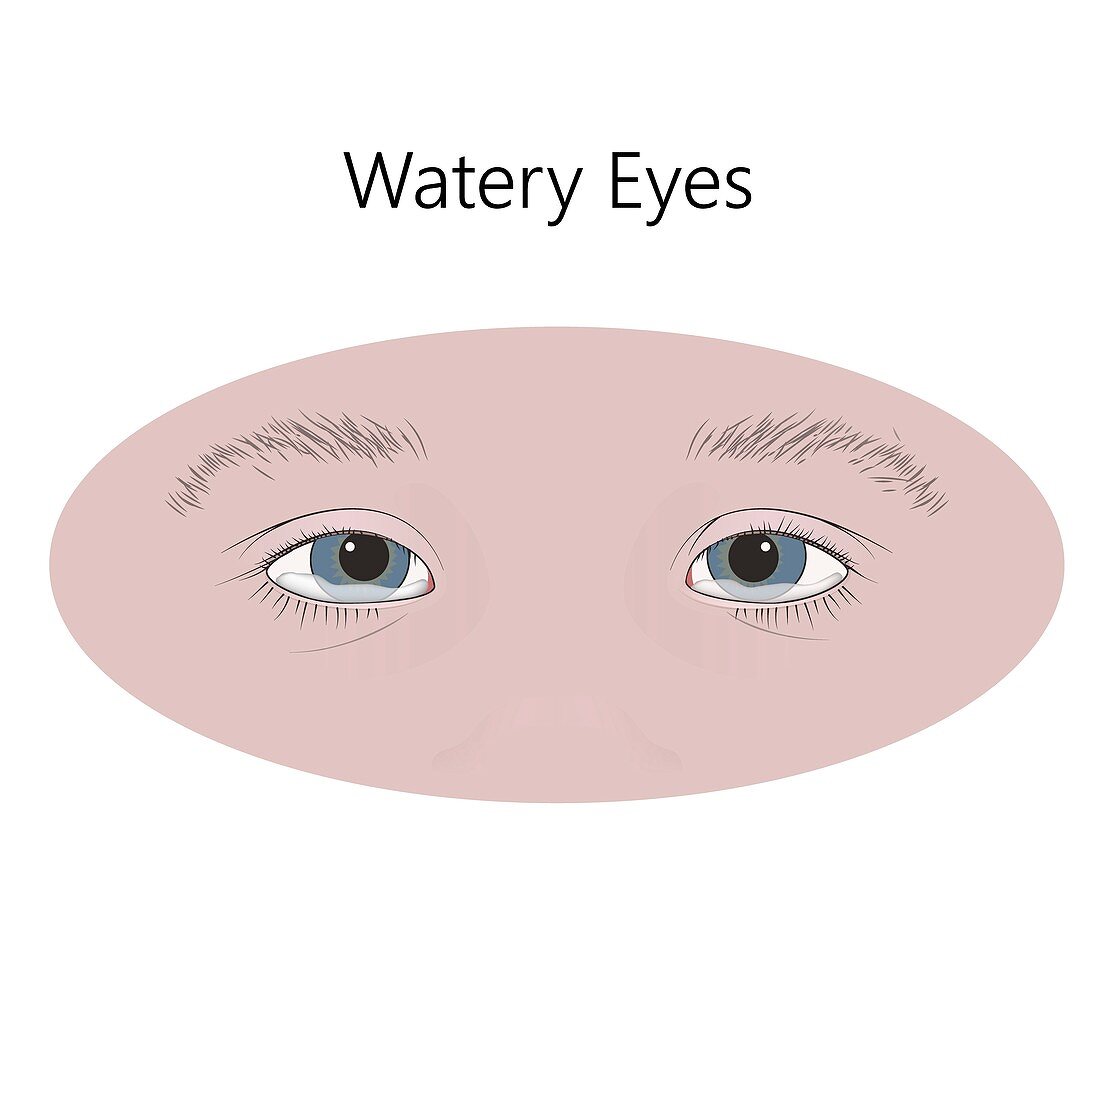 Watery eyes, illustration